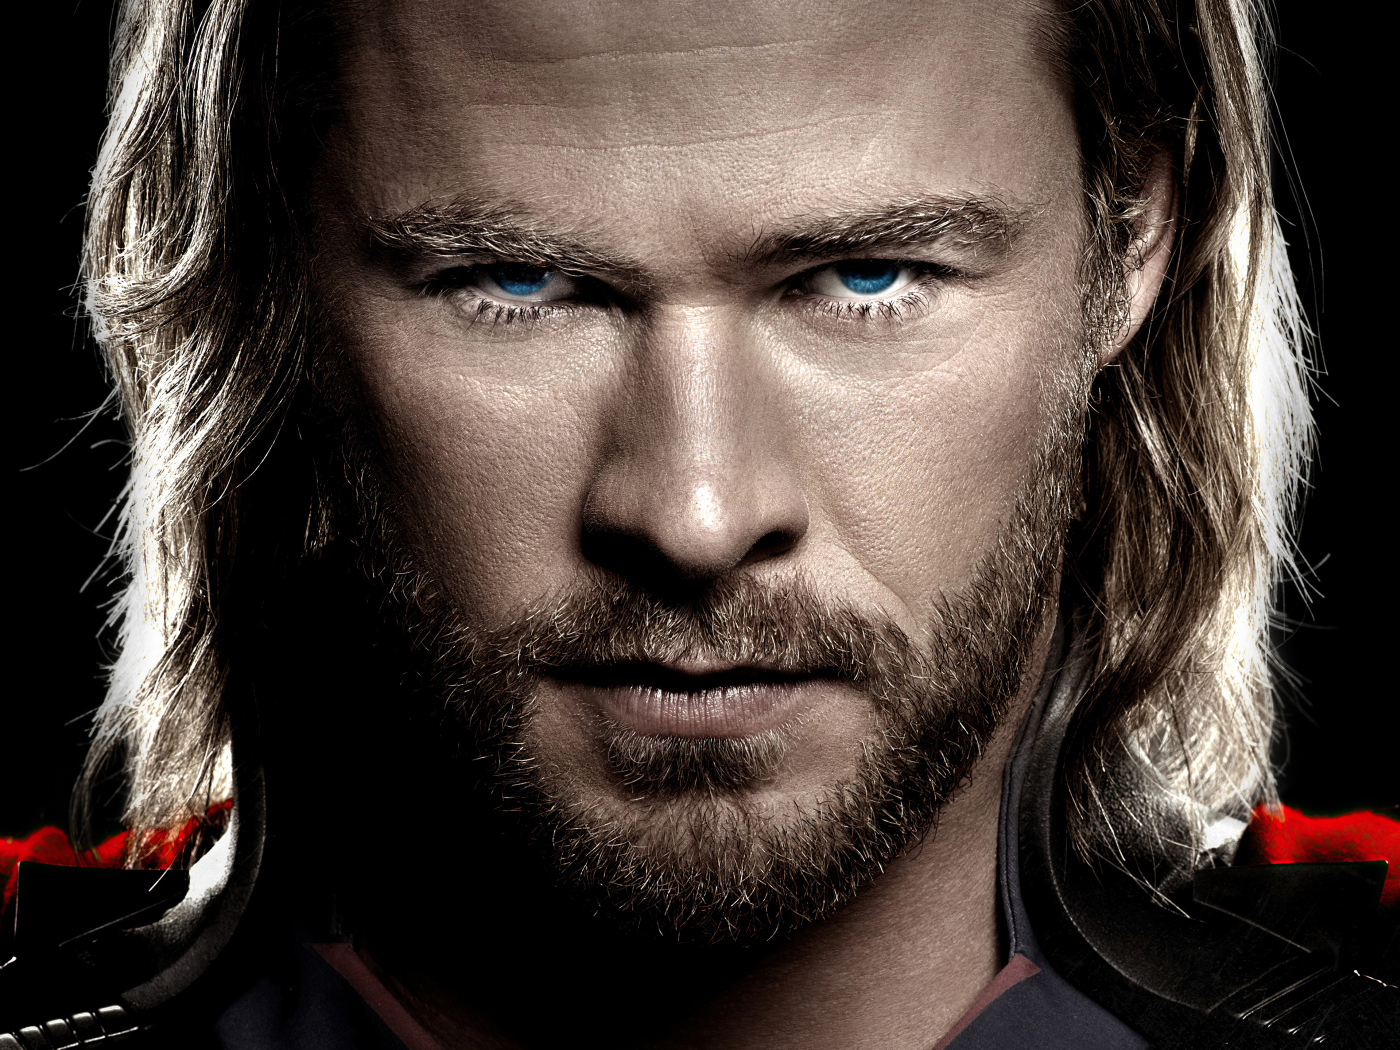 Actor Chris Hemsworth as Thor